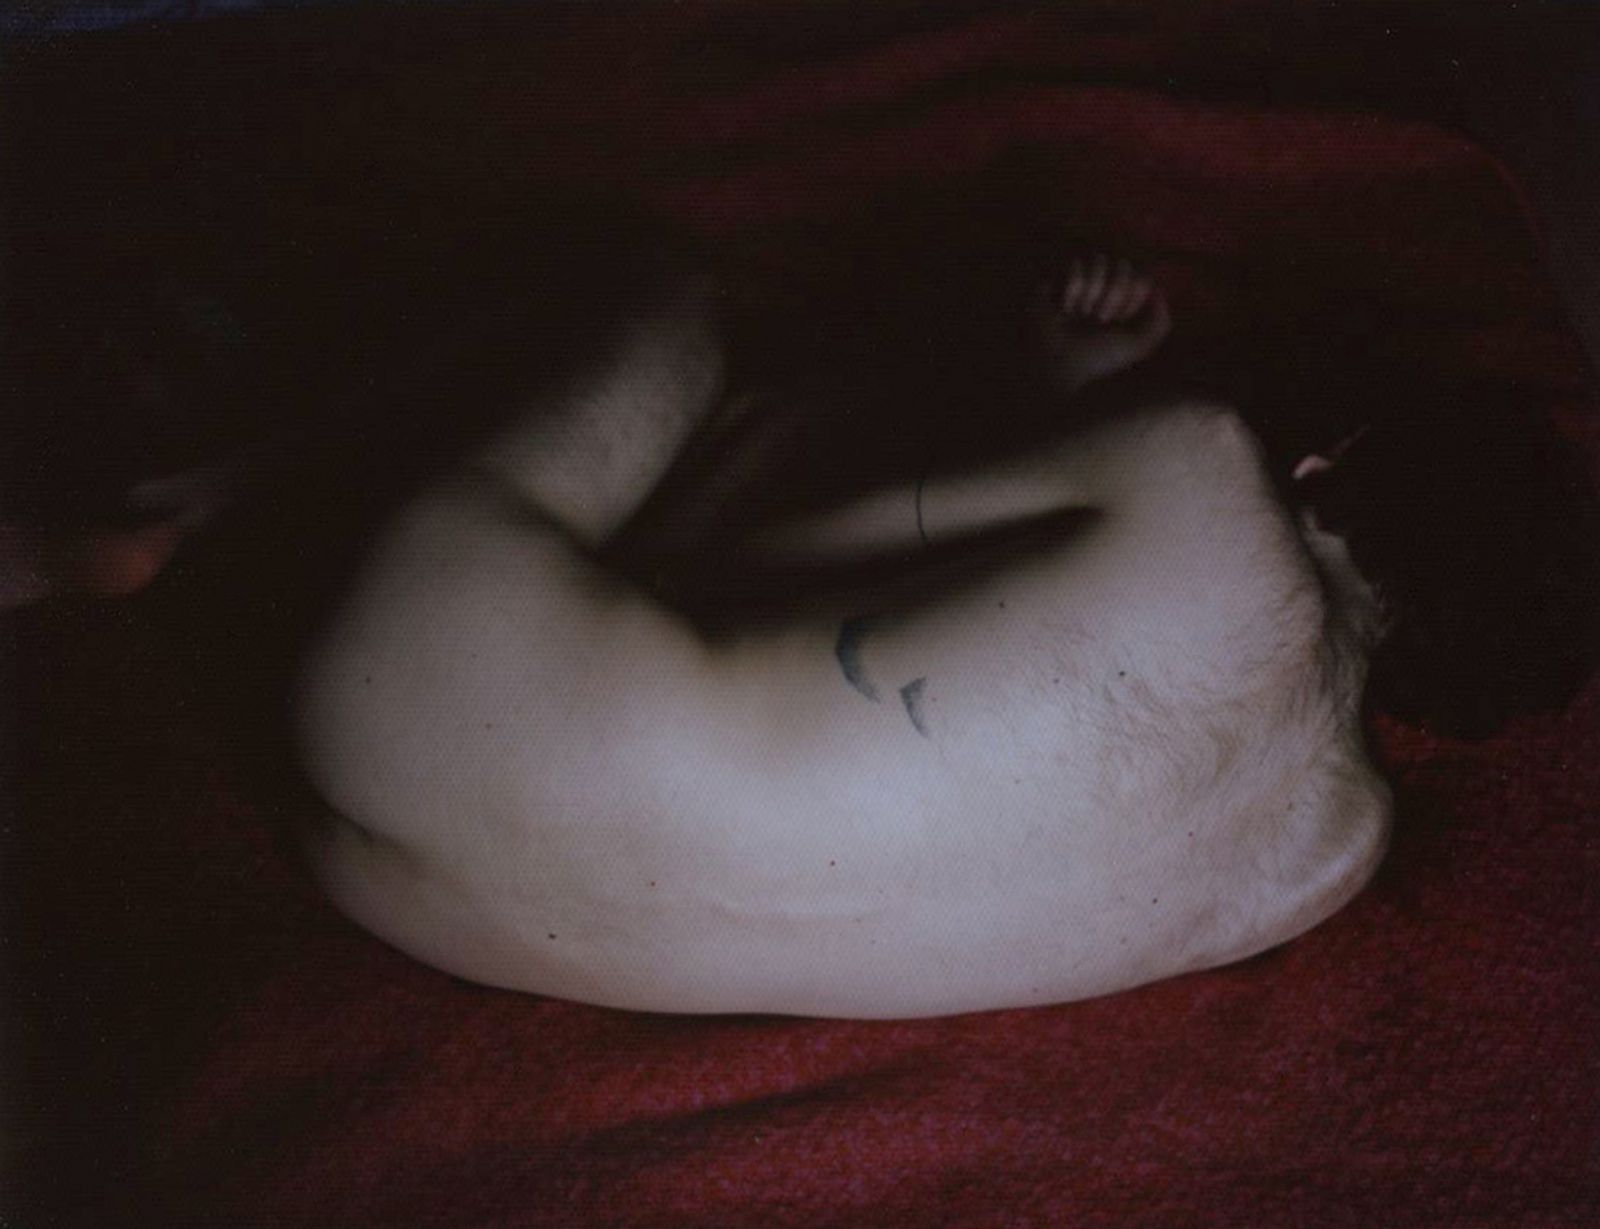 © Ekaterina Anokhina - Image from the Nudes photography project